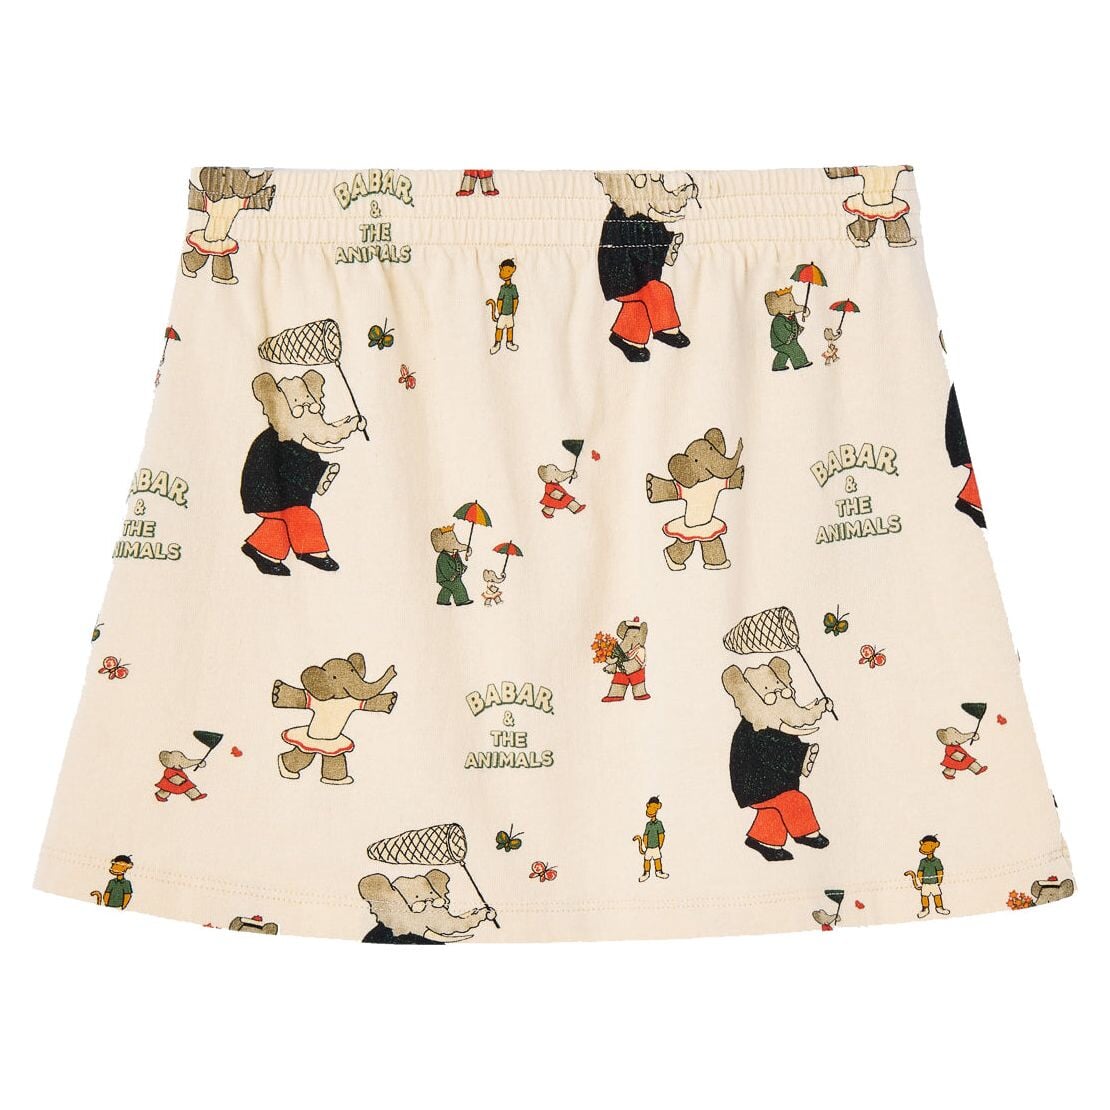 Babar Wombat Kids Skirt - Elephants Butterfly